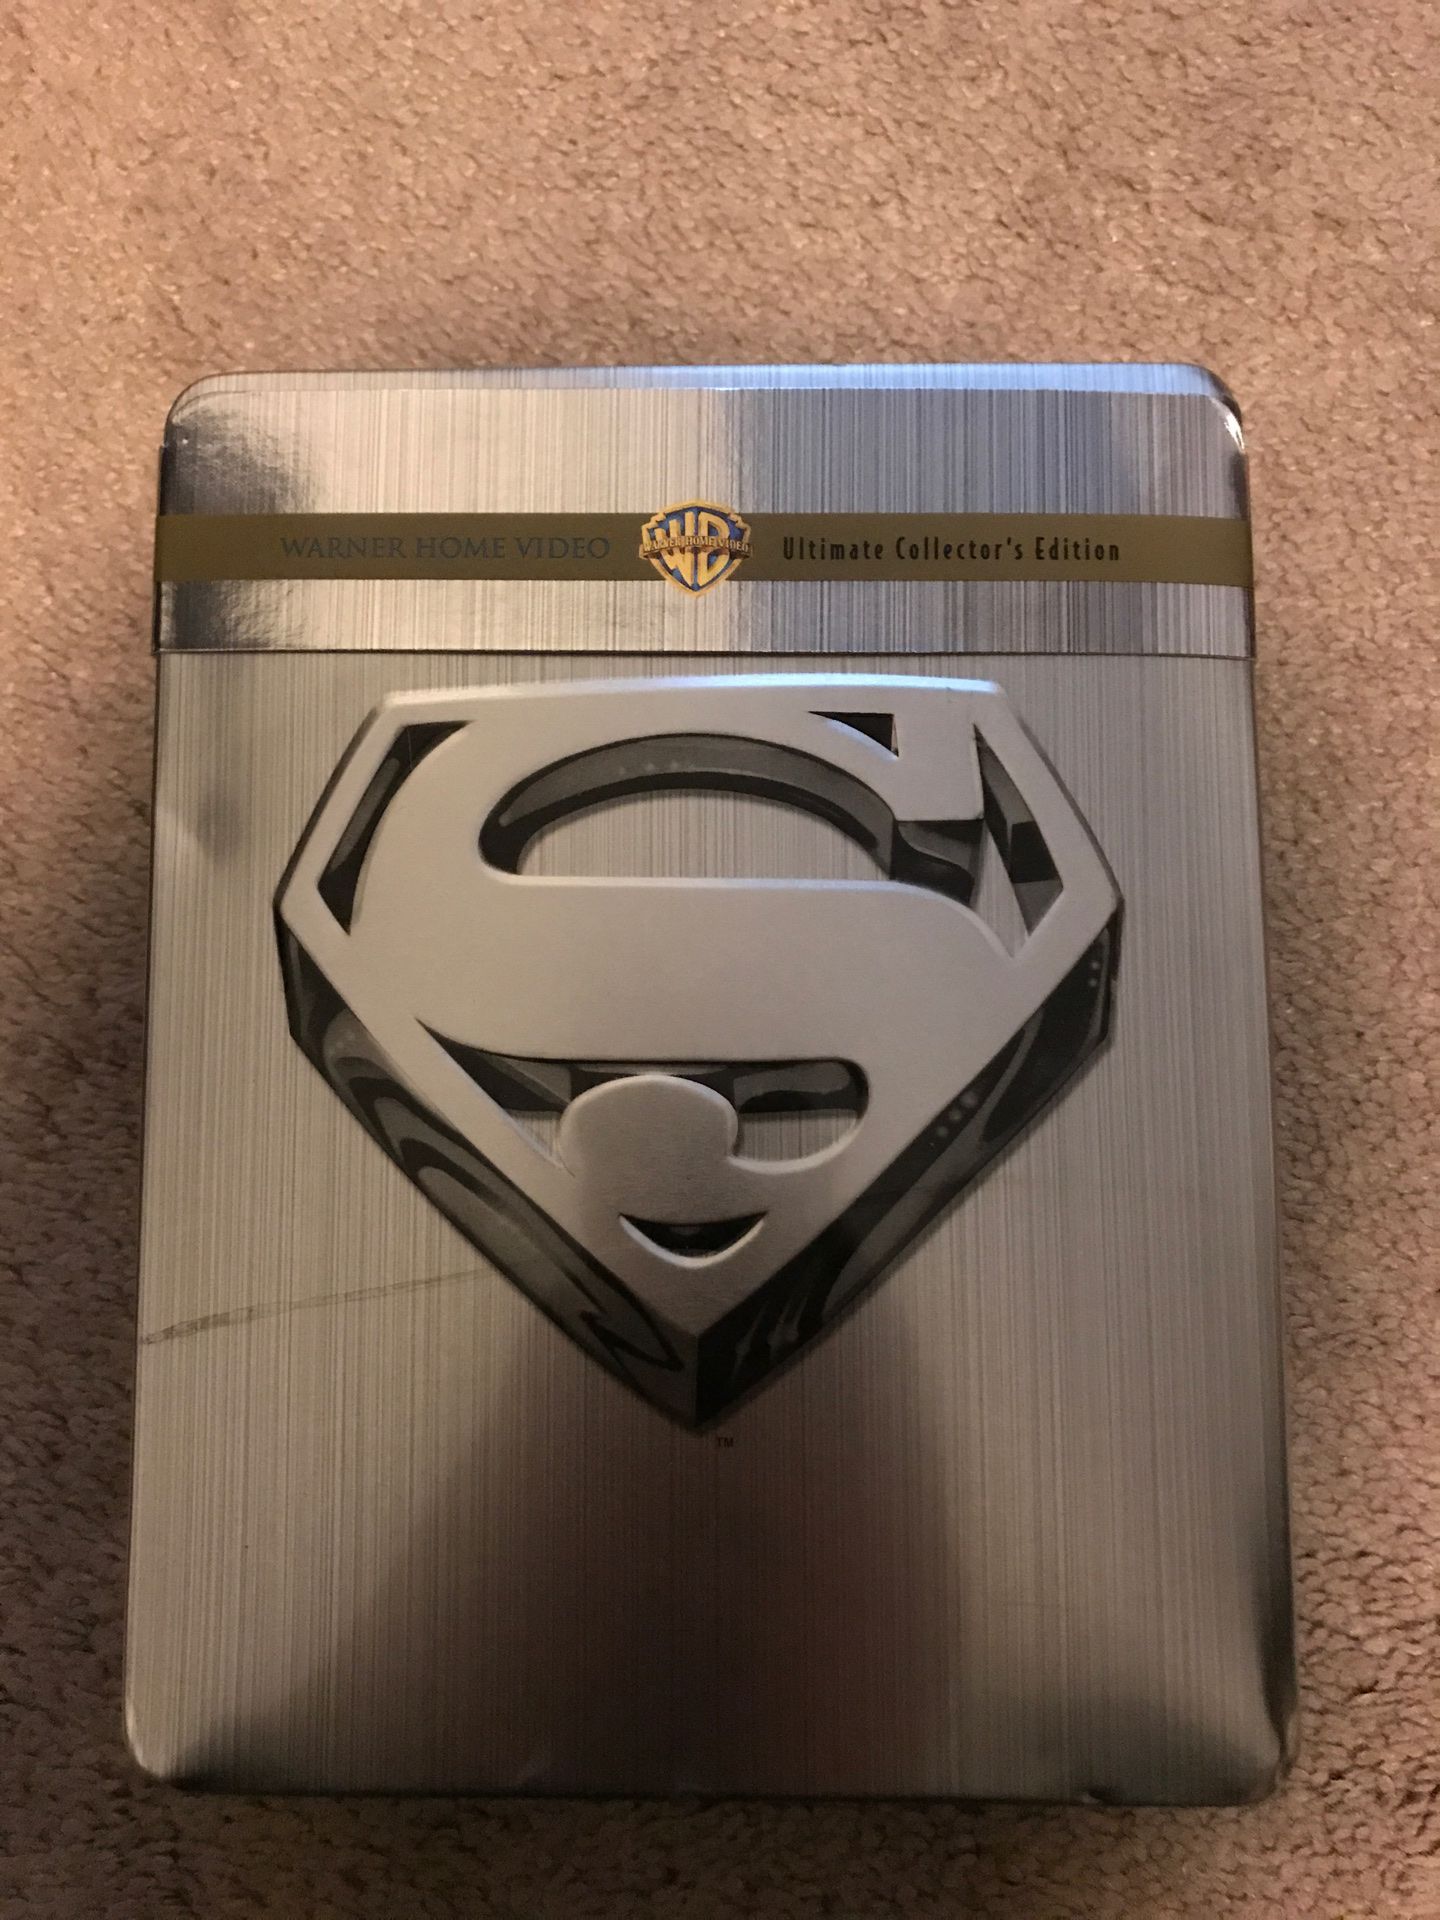 14 discs DVD Superman Ultramate collector’s edition metal box set